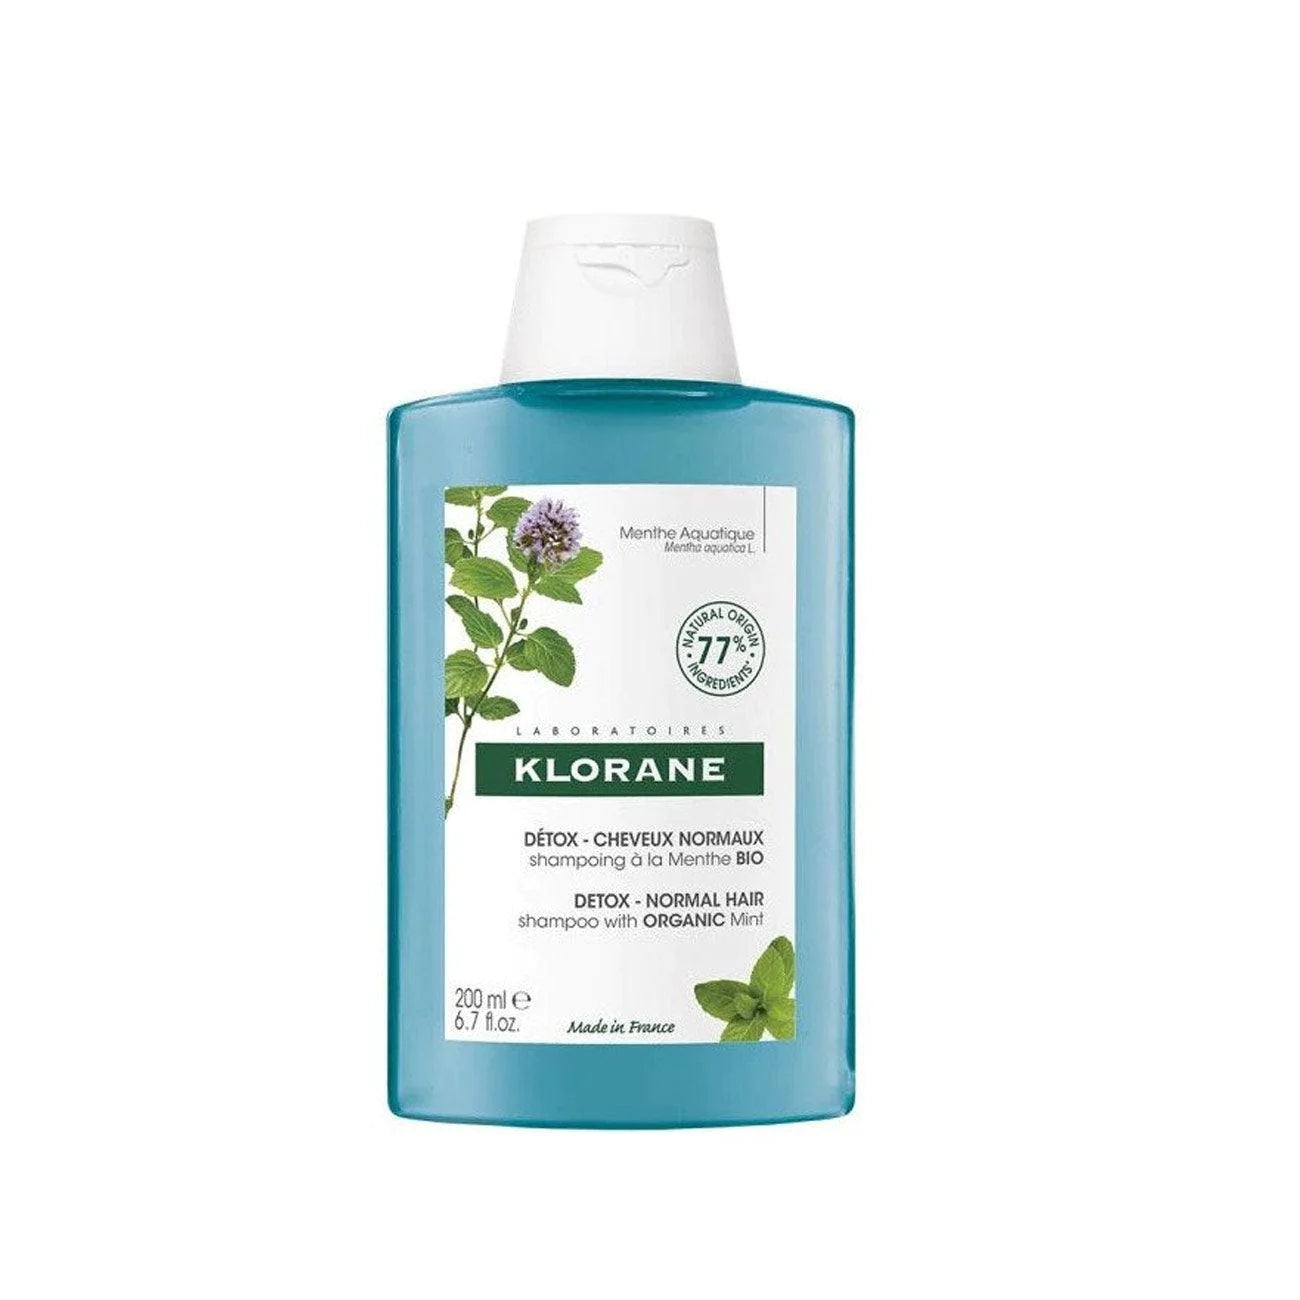 KLORANE Detox Shampoo with Aquatic Mint 200ml